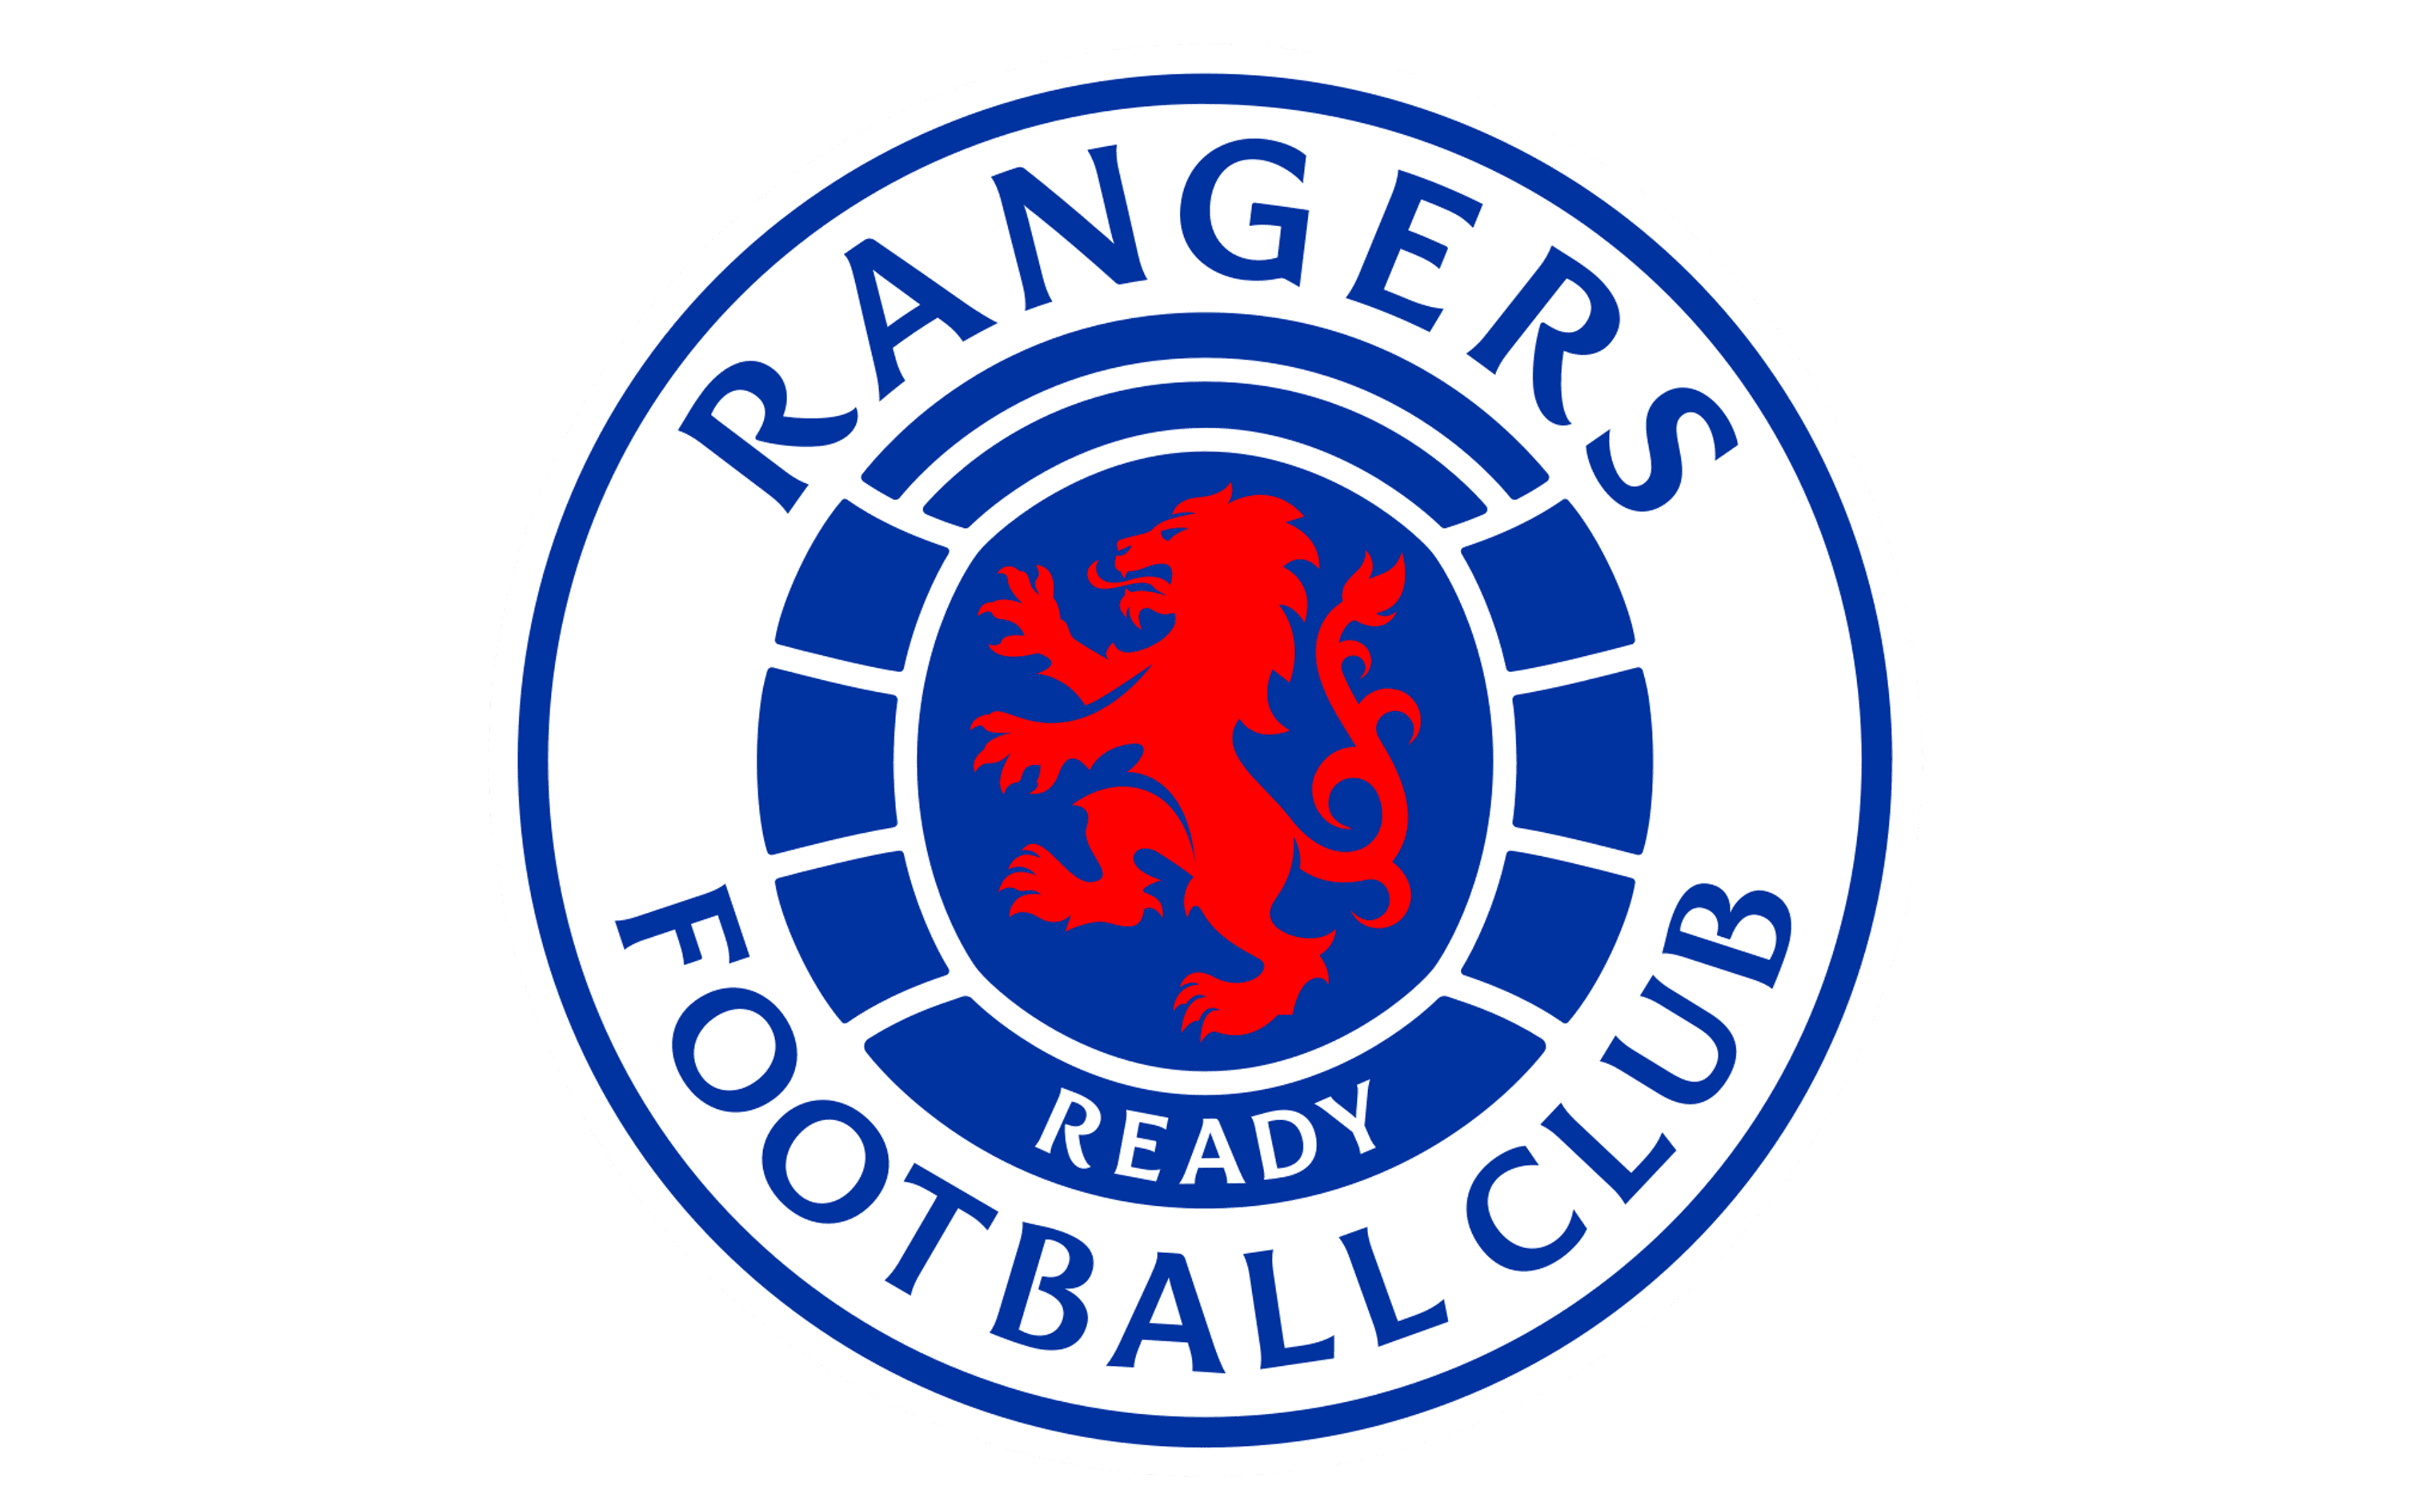 Rangers International Football Club plc